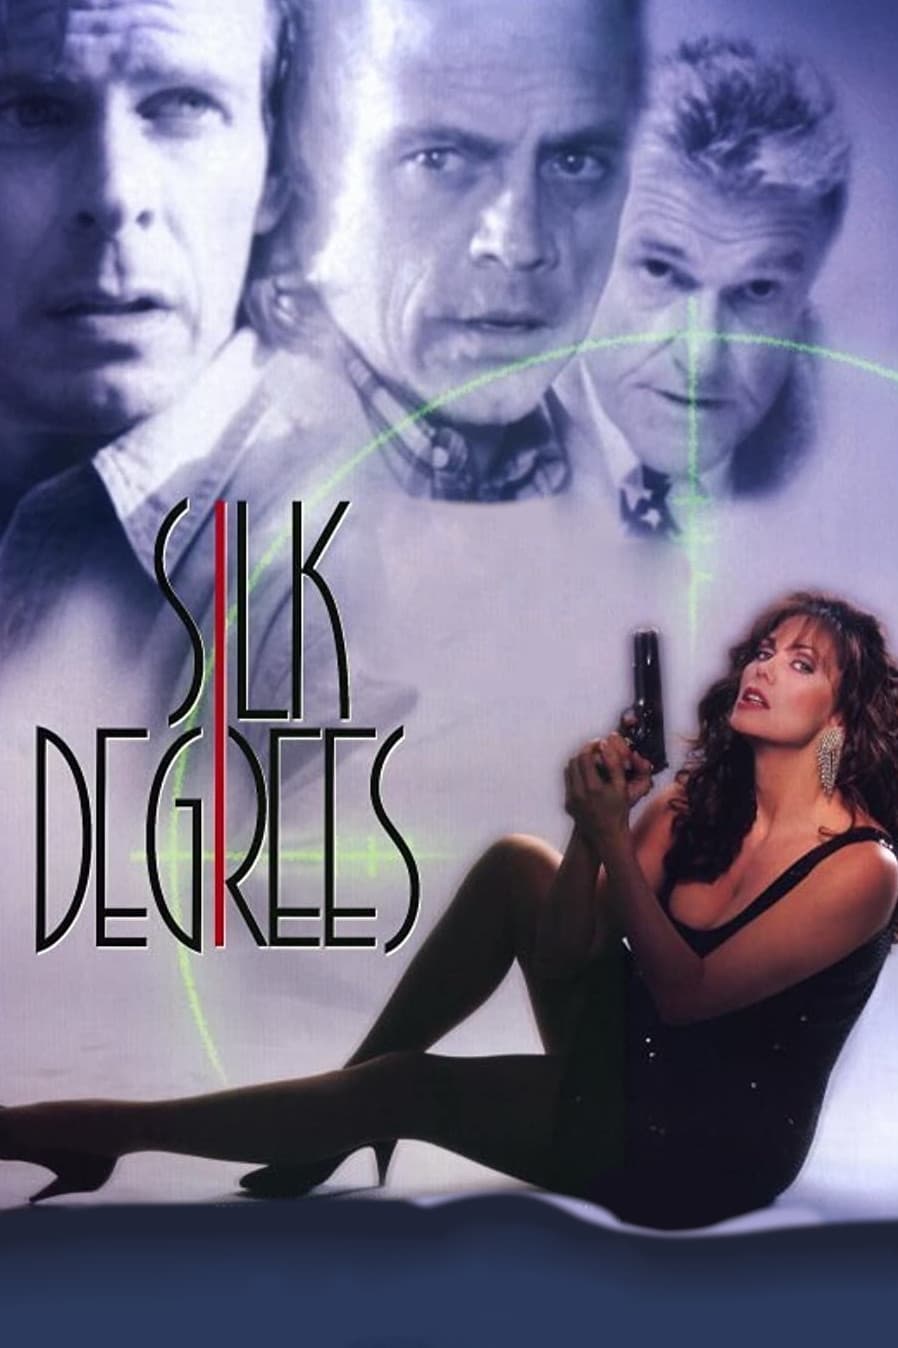 Silk Degrees (1994)